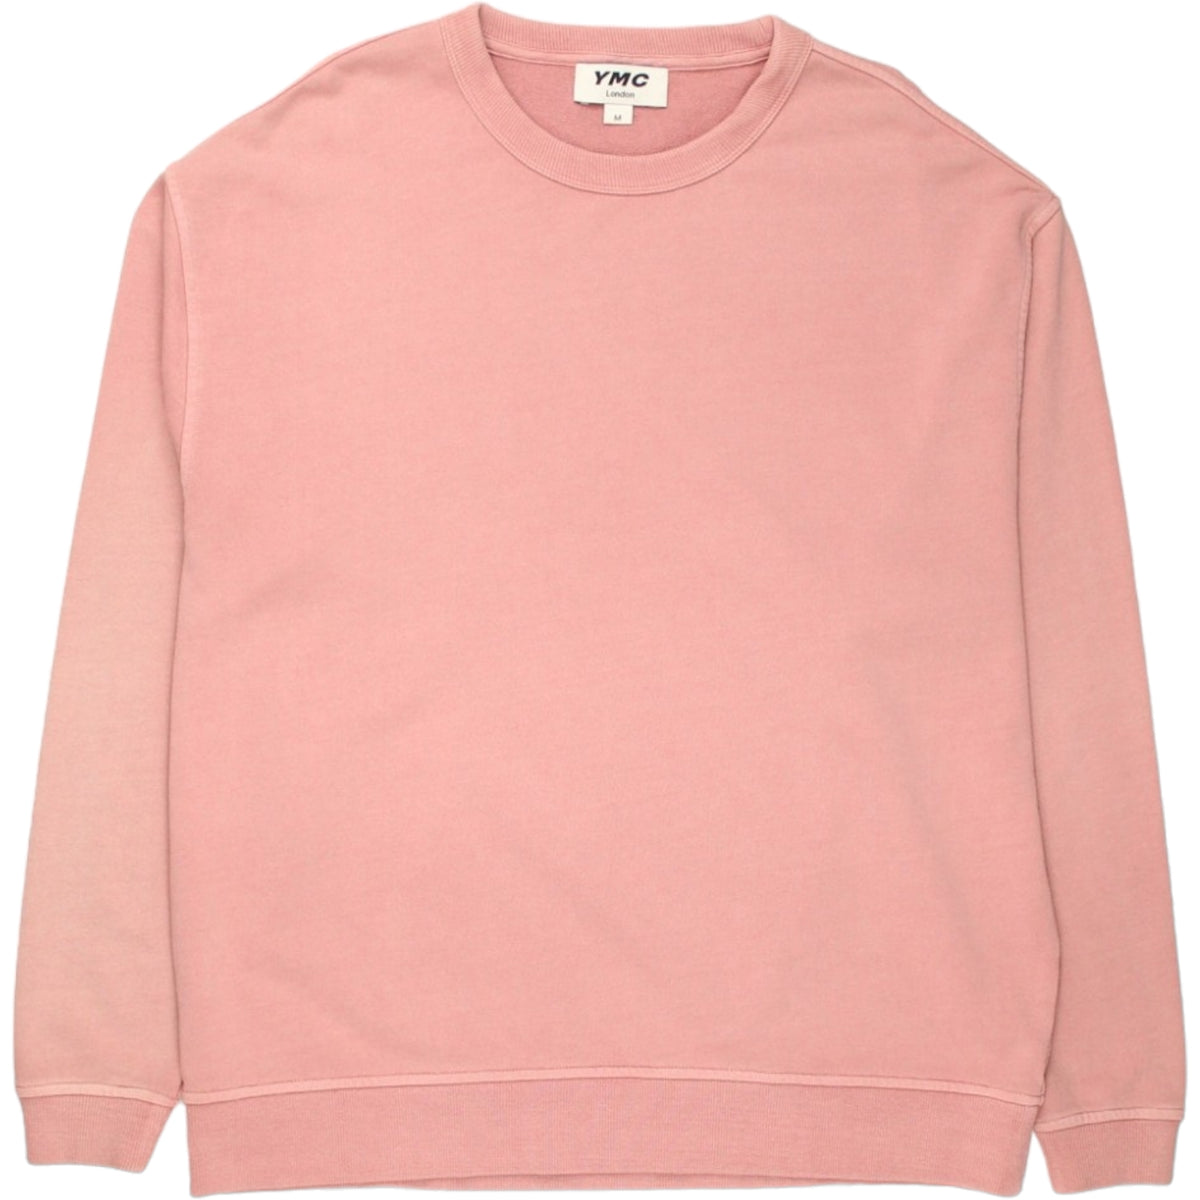 YMC Plaster Pink Sweatshirt